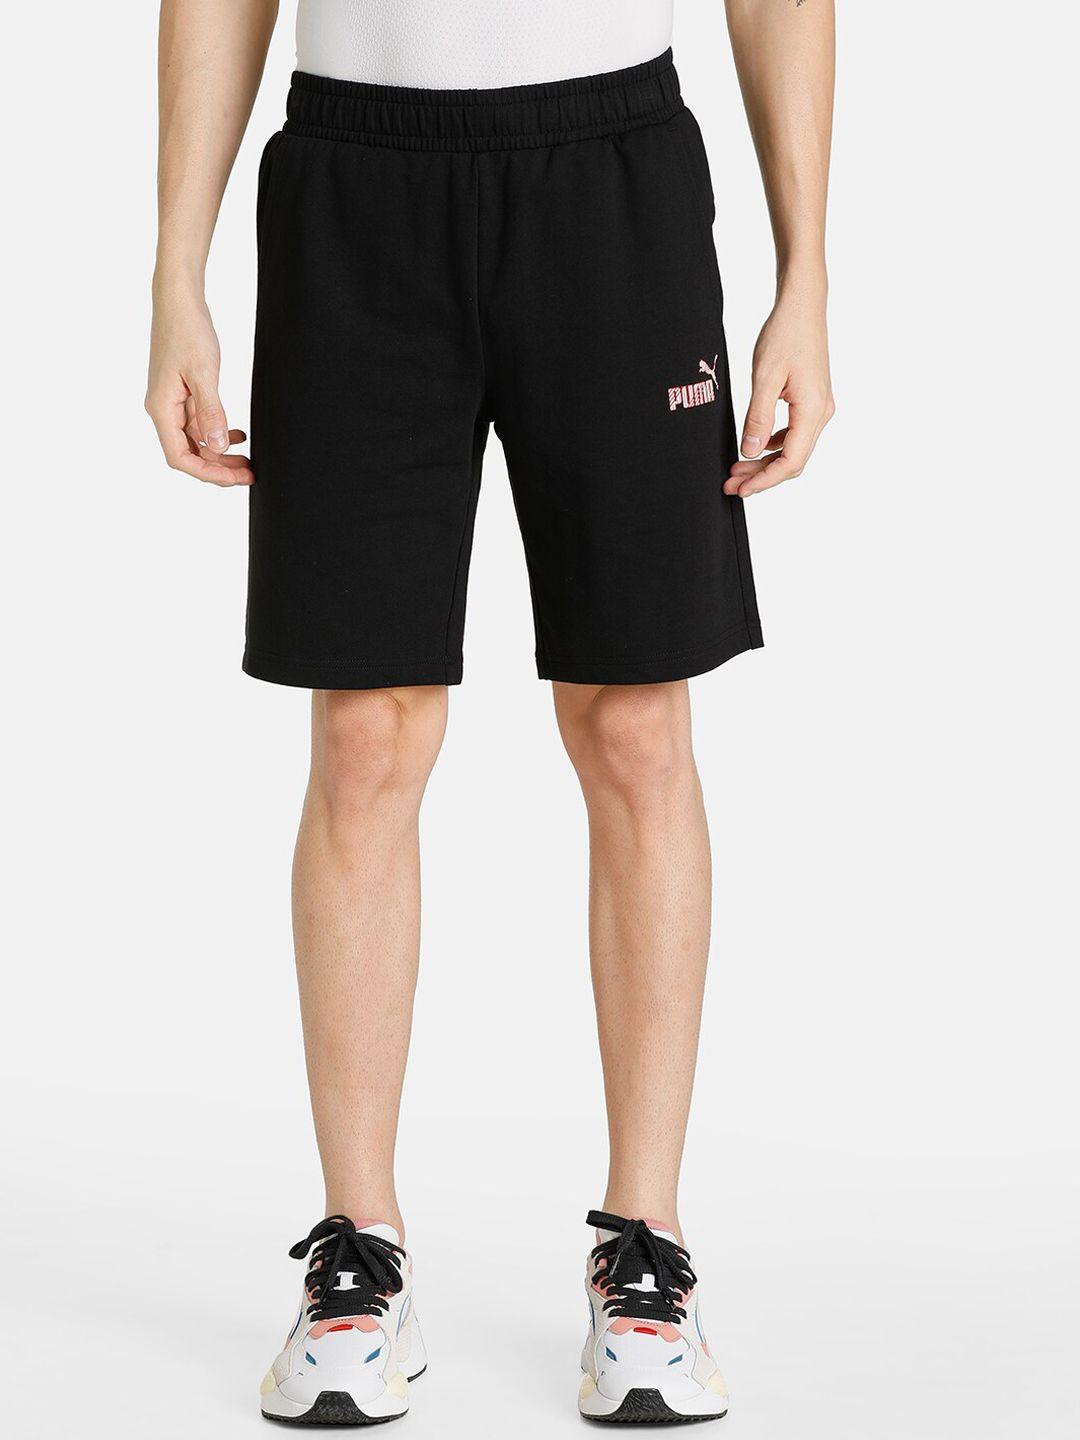 puma men black criss-cross slim fit sports shorts